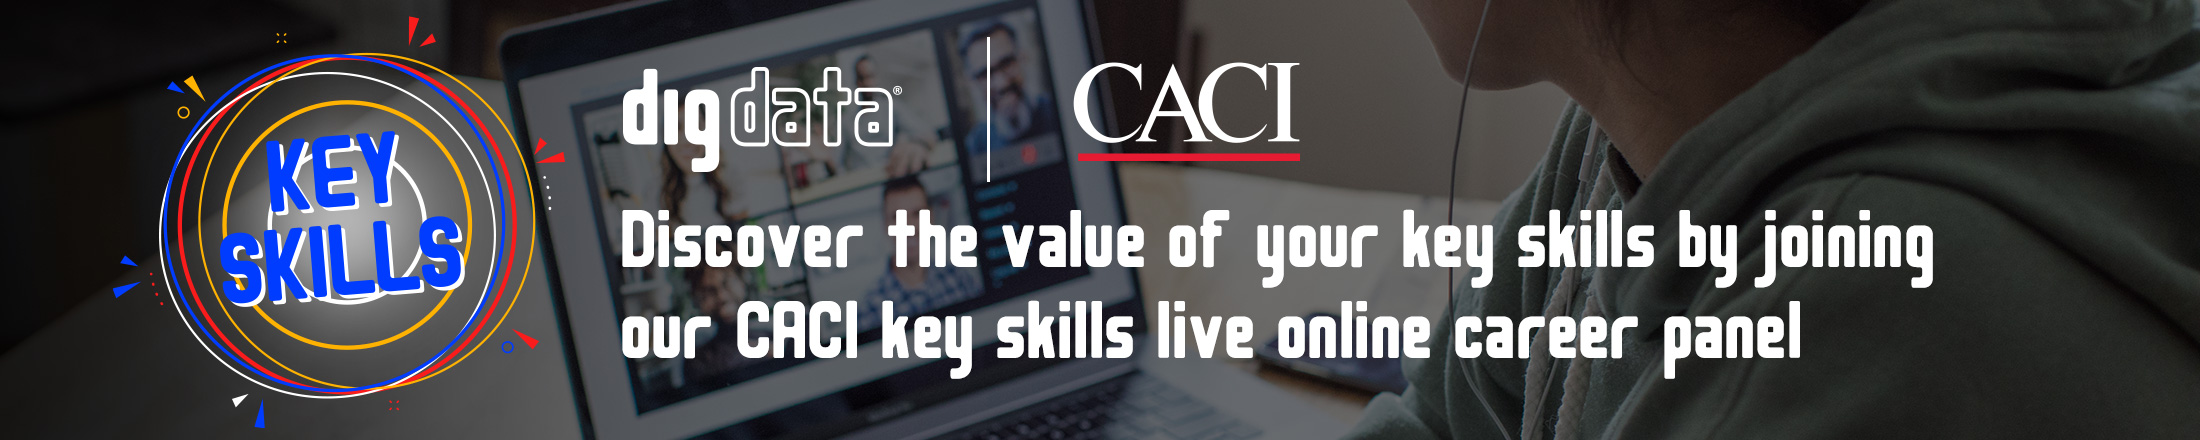 CACI Career Panel Banner